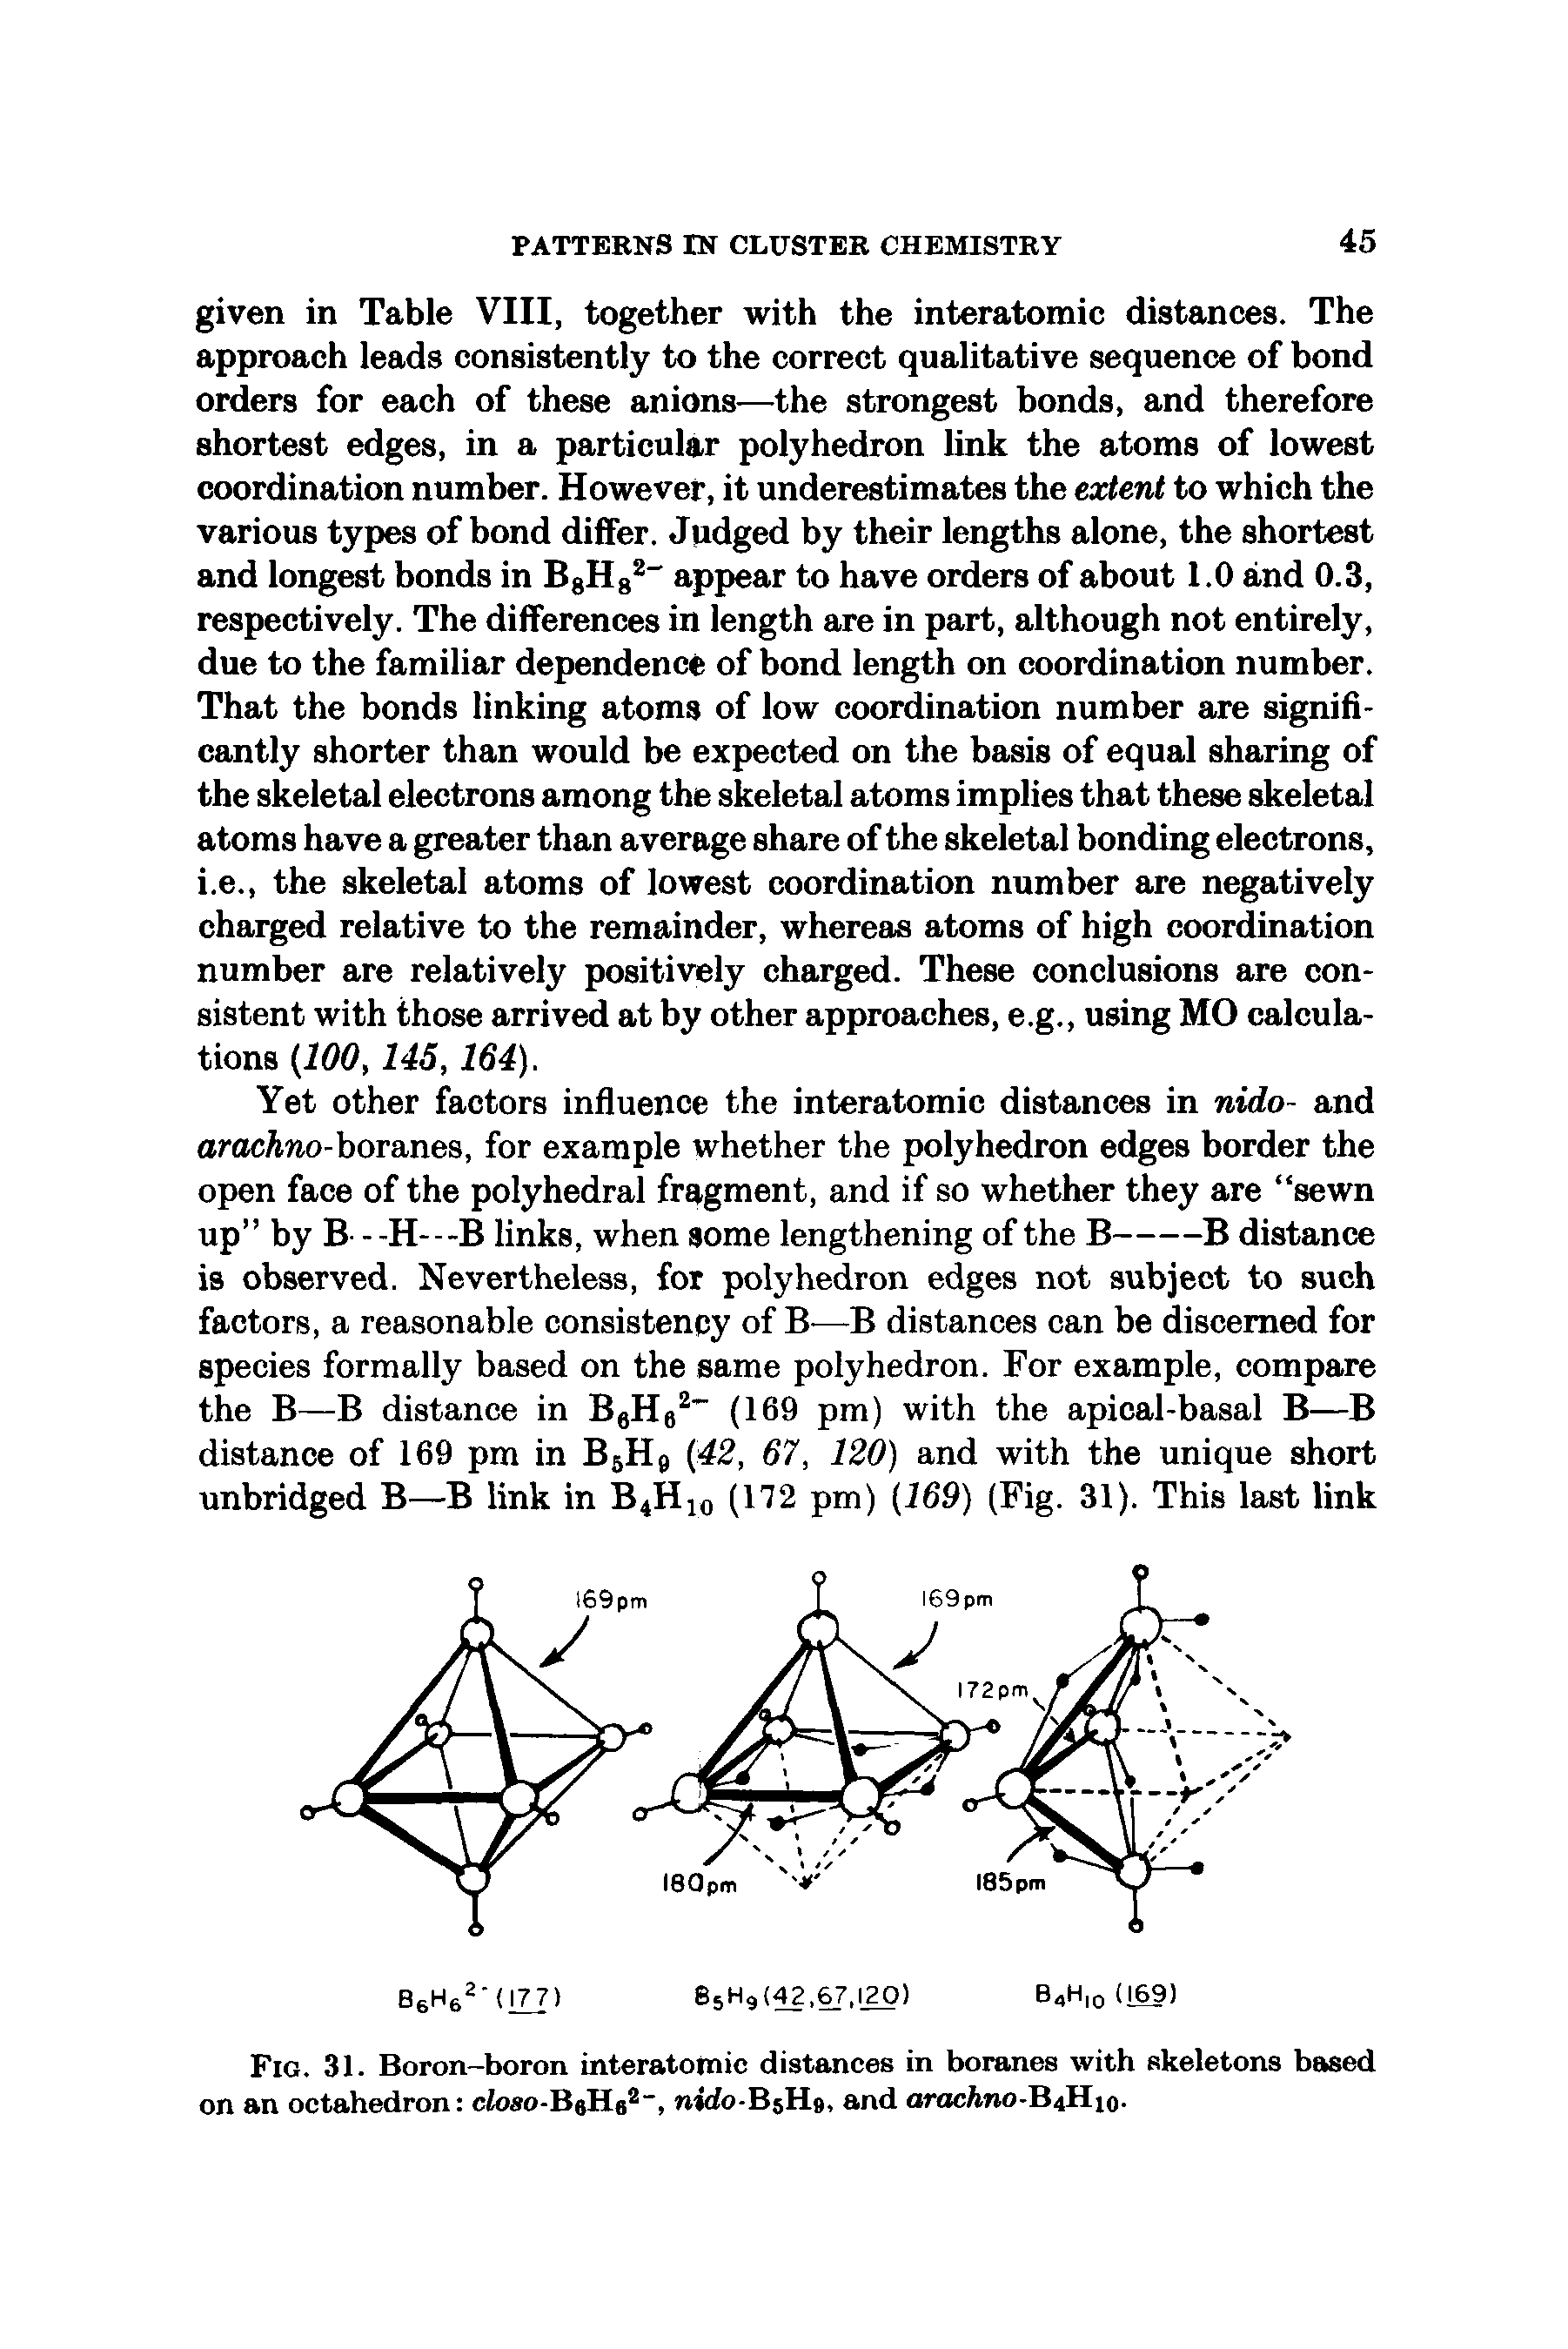 Fig. 31. Boron-boron interatomic distances in boranes with skeletons based on an octahedron closo-BgHg ", nido-BsHg, and arachno- iRio.